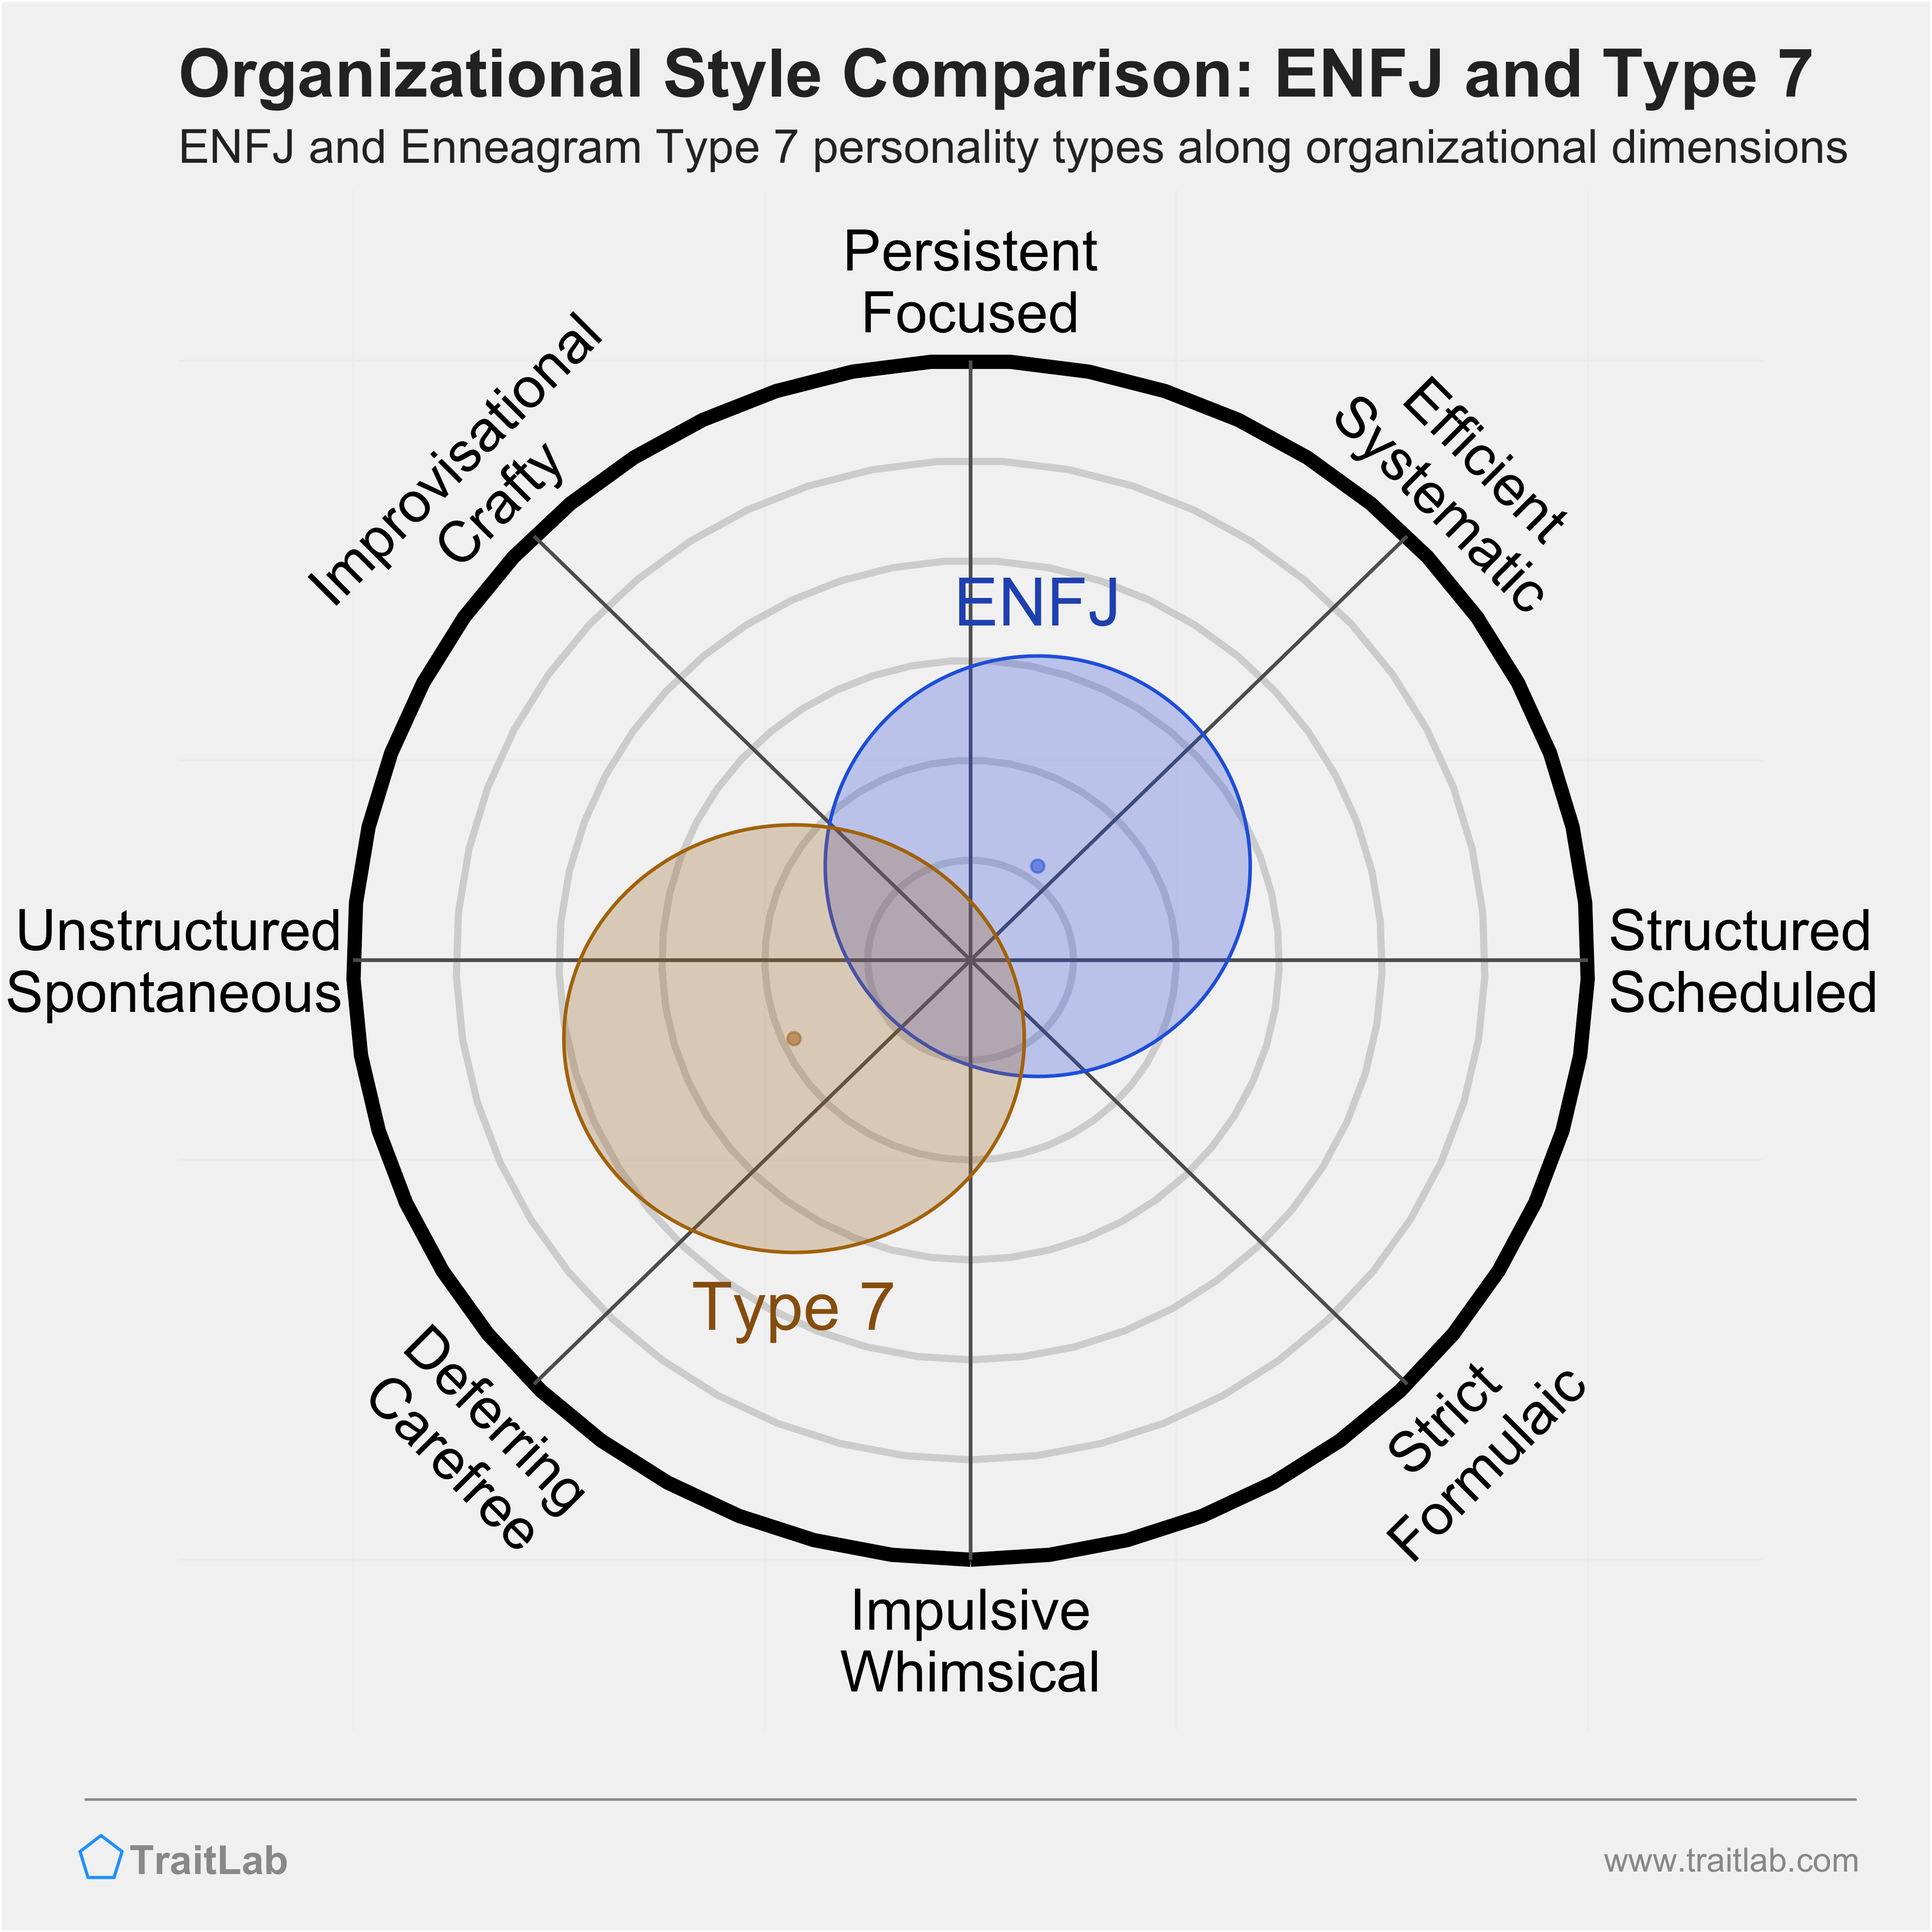 ENFJ and Type 7 comparison across organizational dimensions